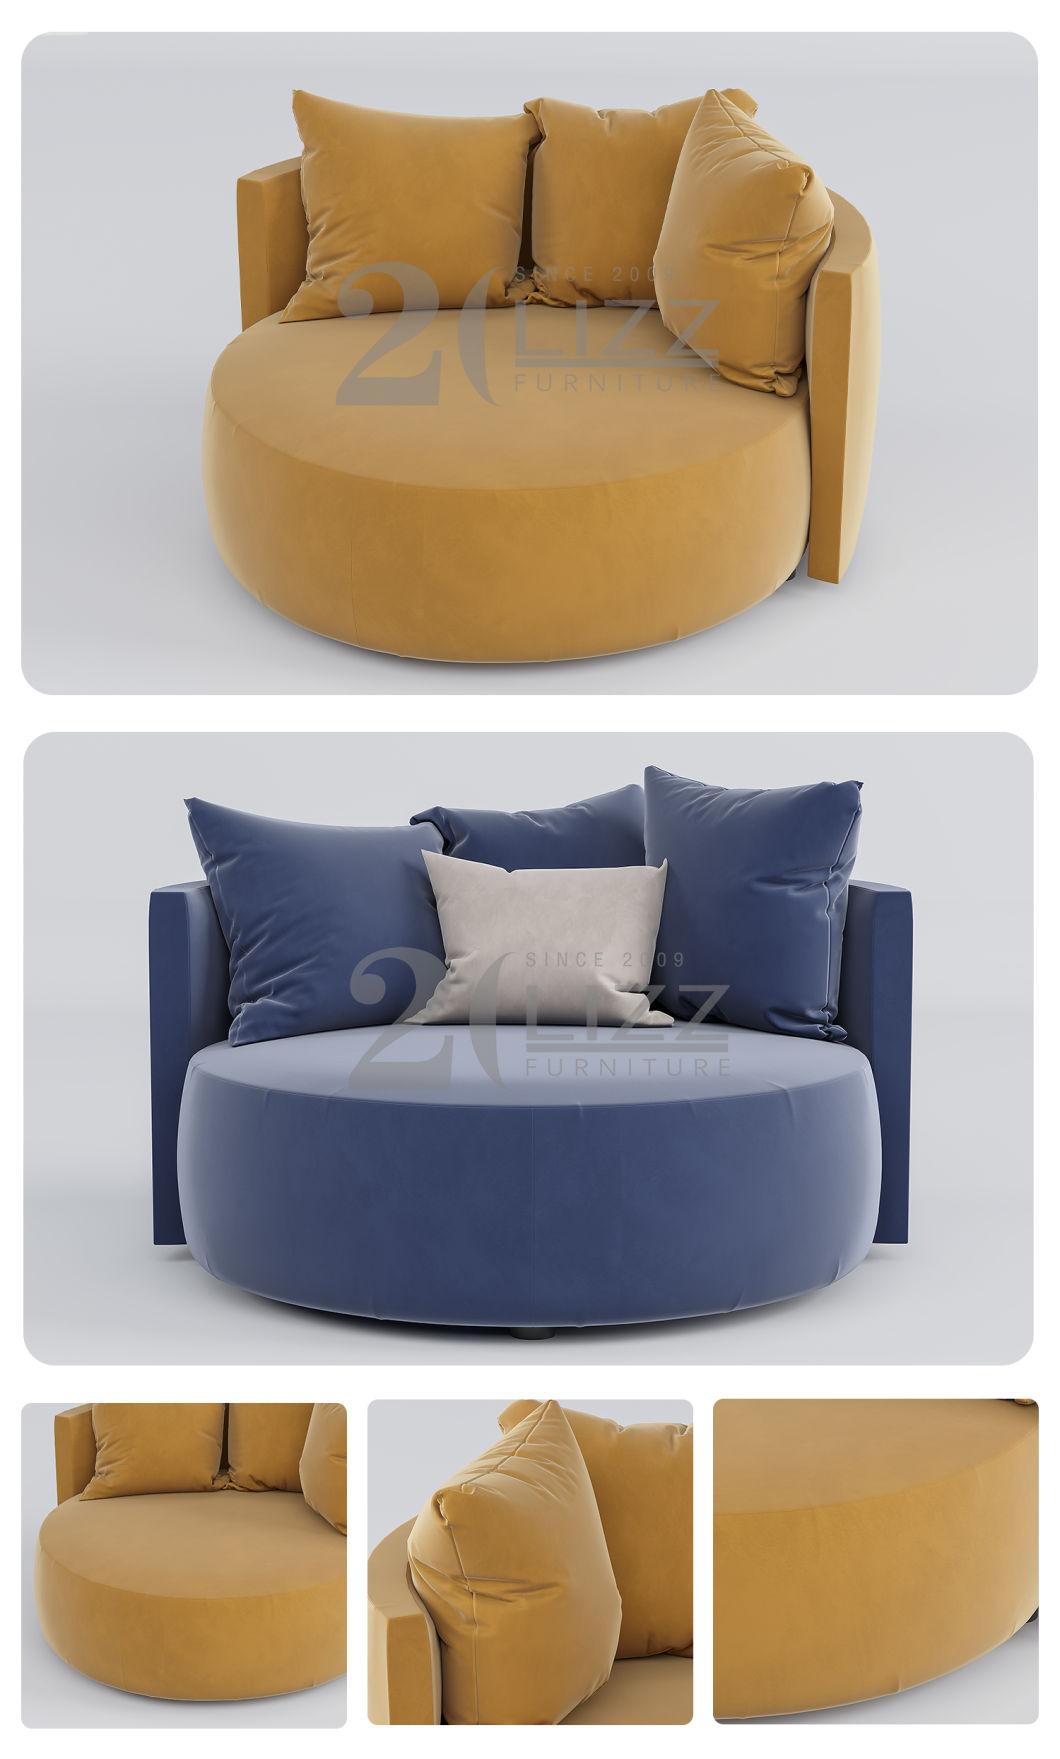 Italian Design Modern Style Home Living Room Furniture Set Leisure Velvet Single Chair with Pillows